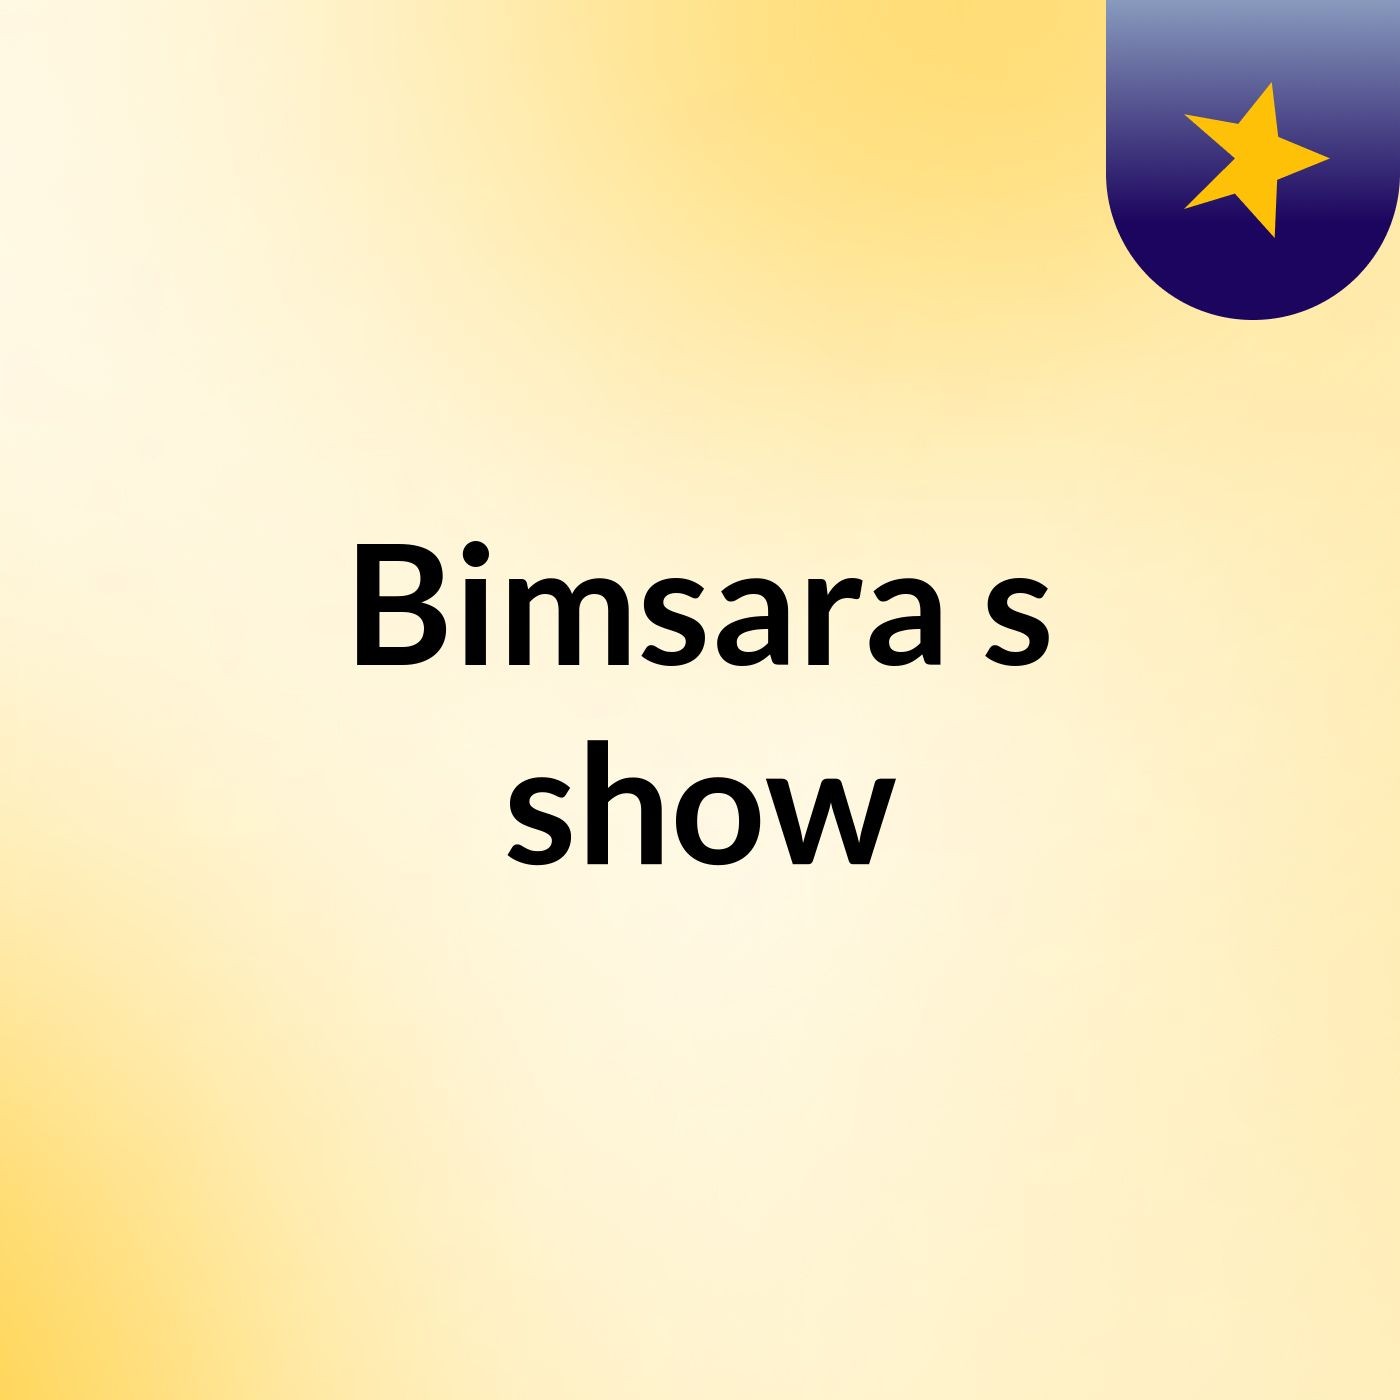 Bimsara's show